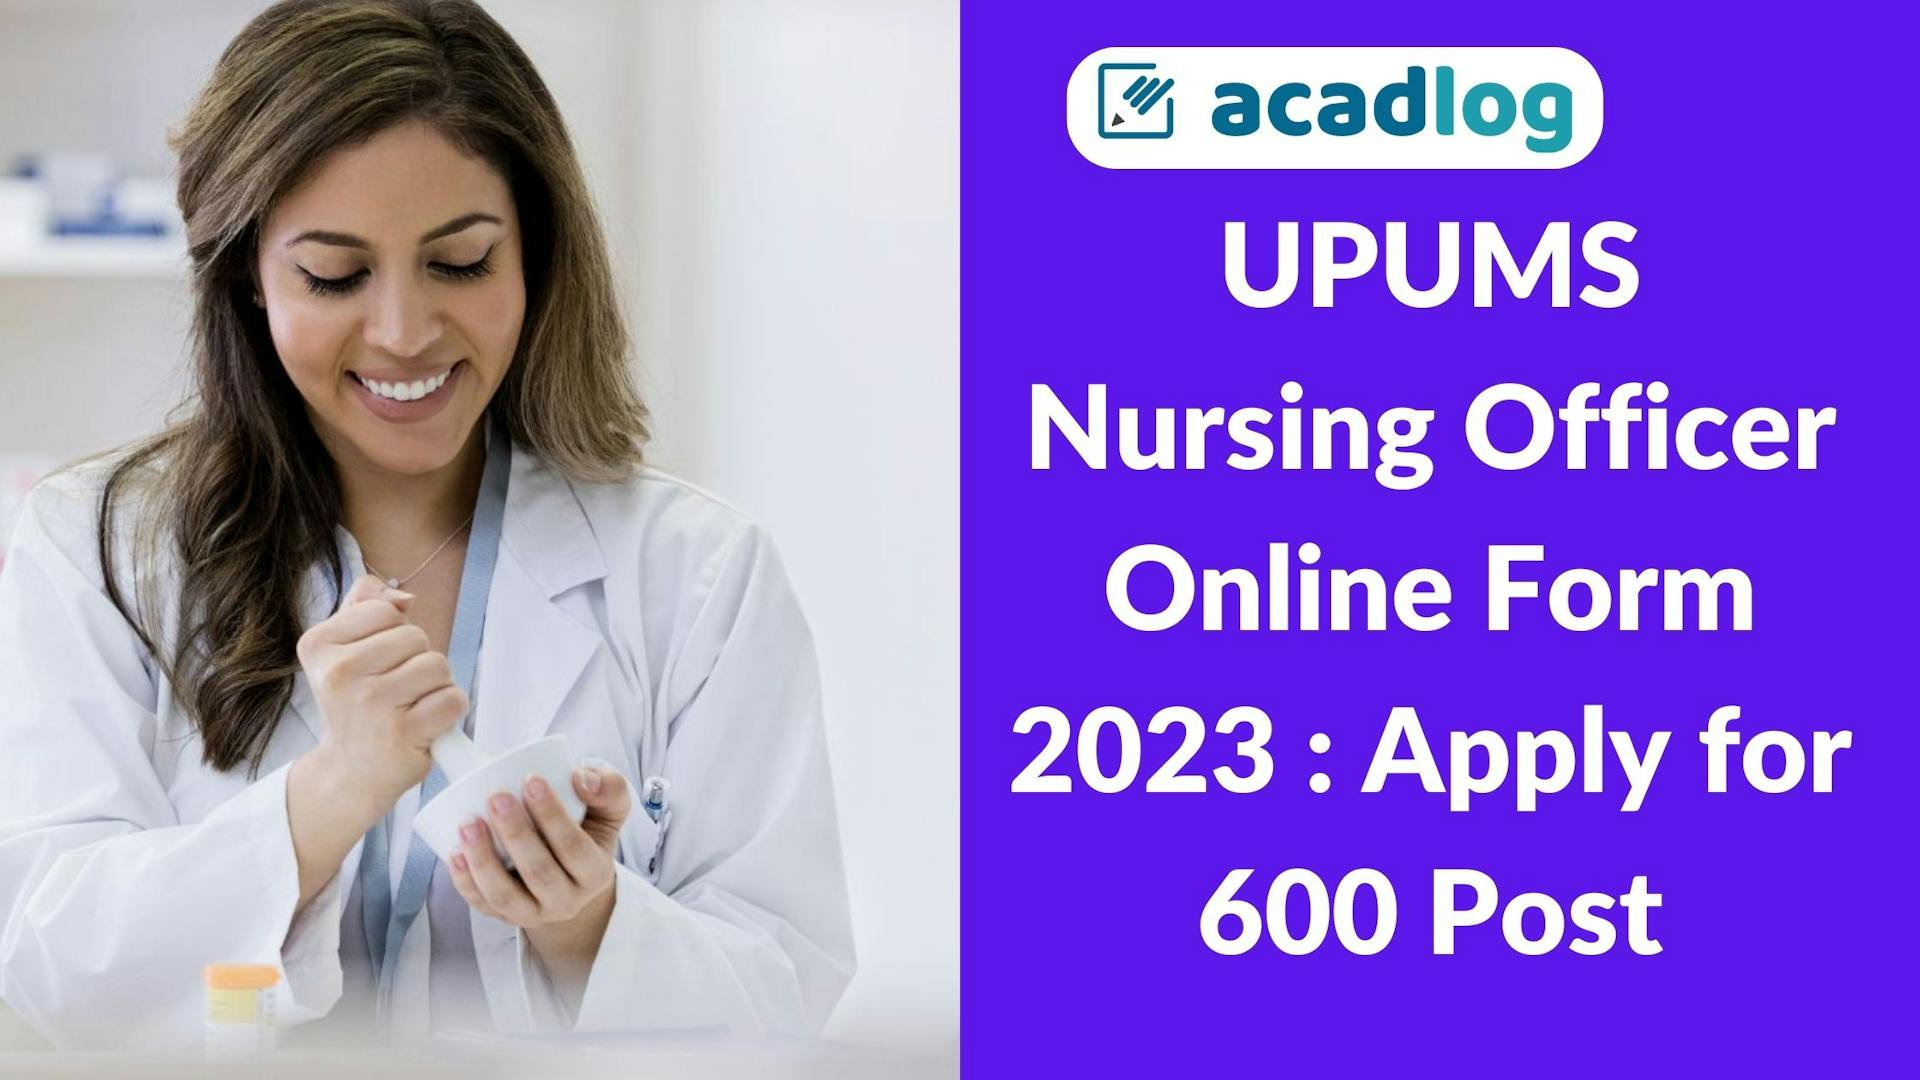 UPUMS Nursing Officer Recruitment 2023 Apply Online for 600 Post